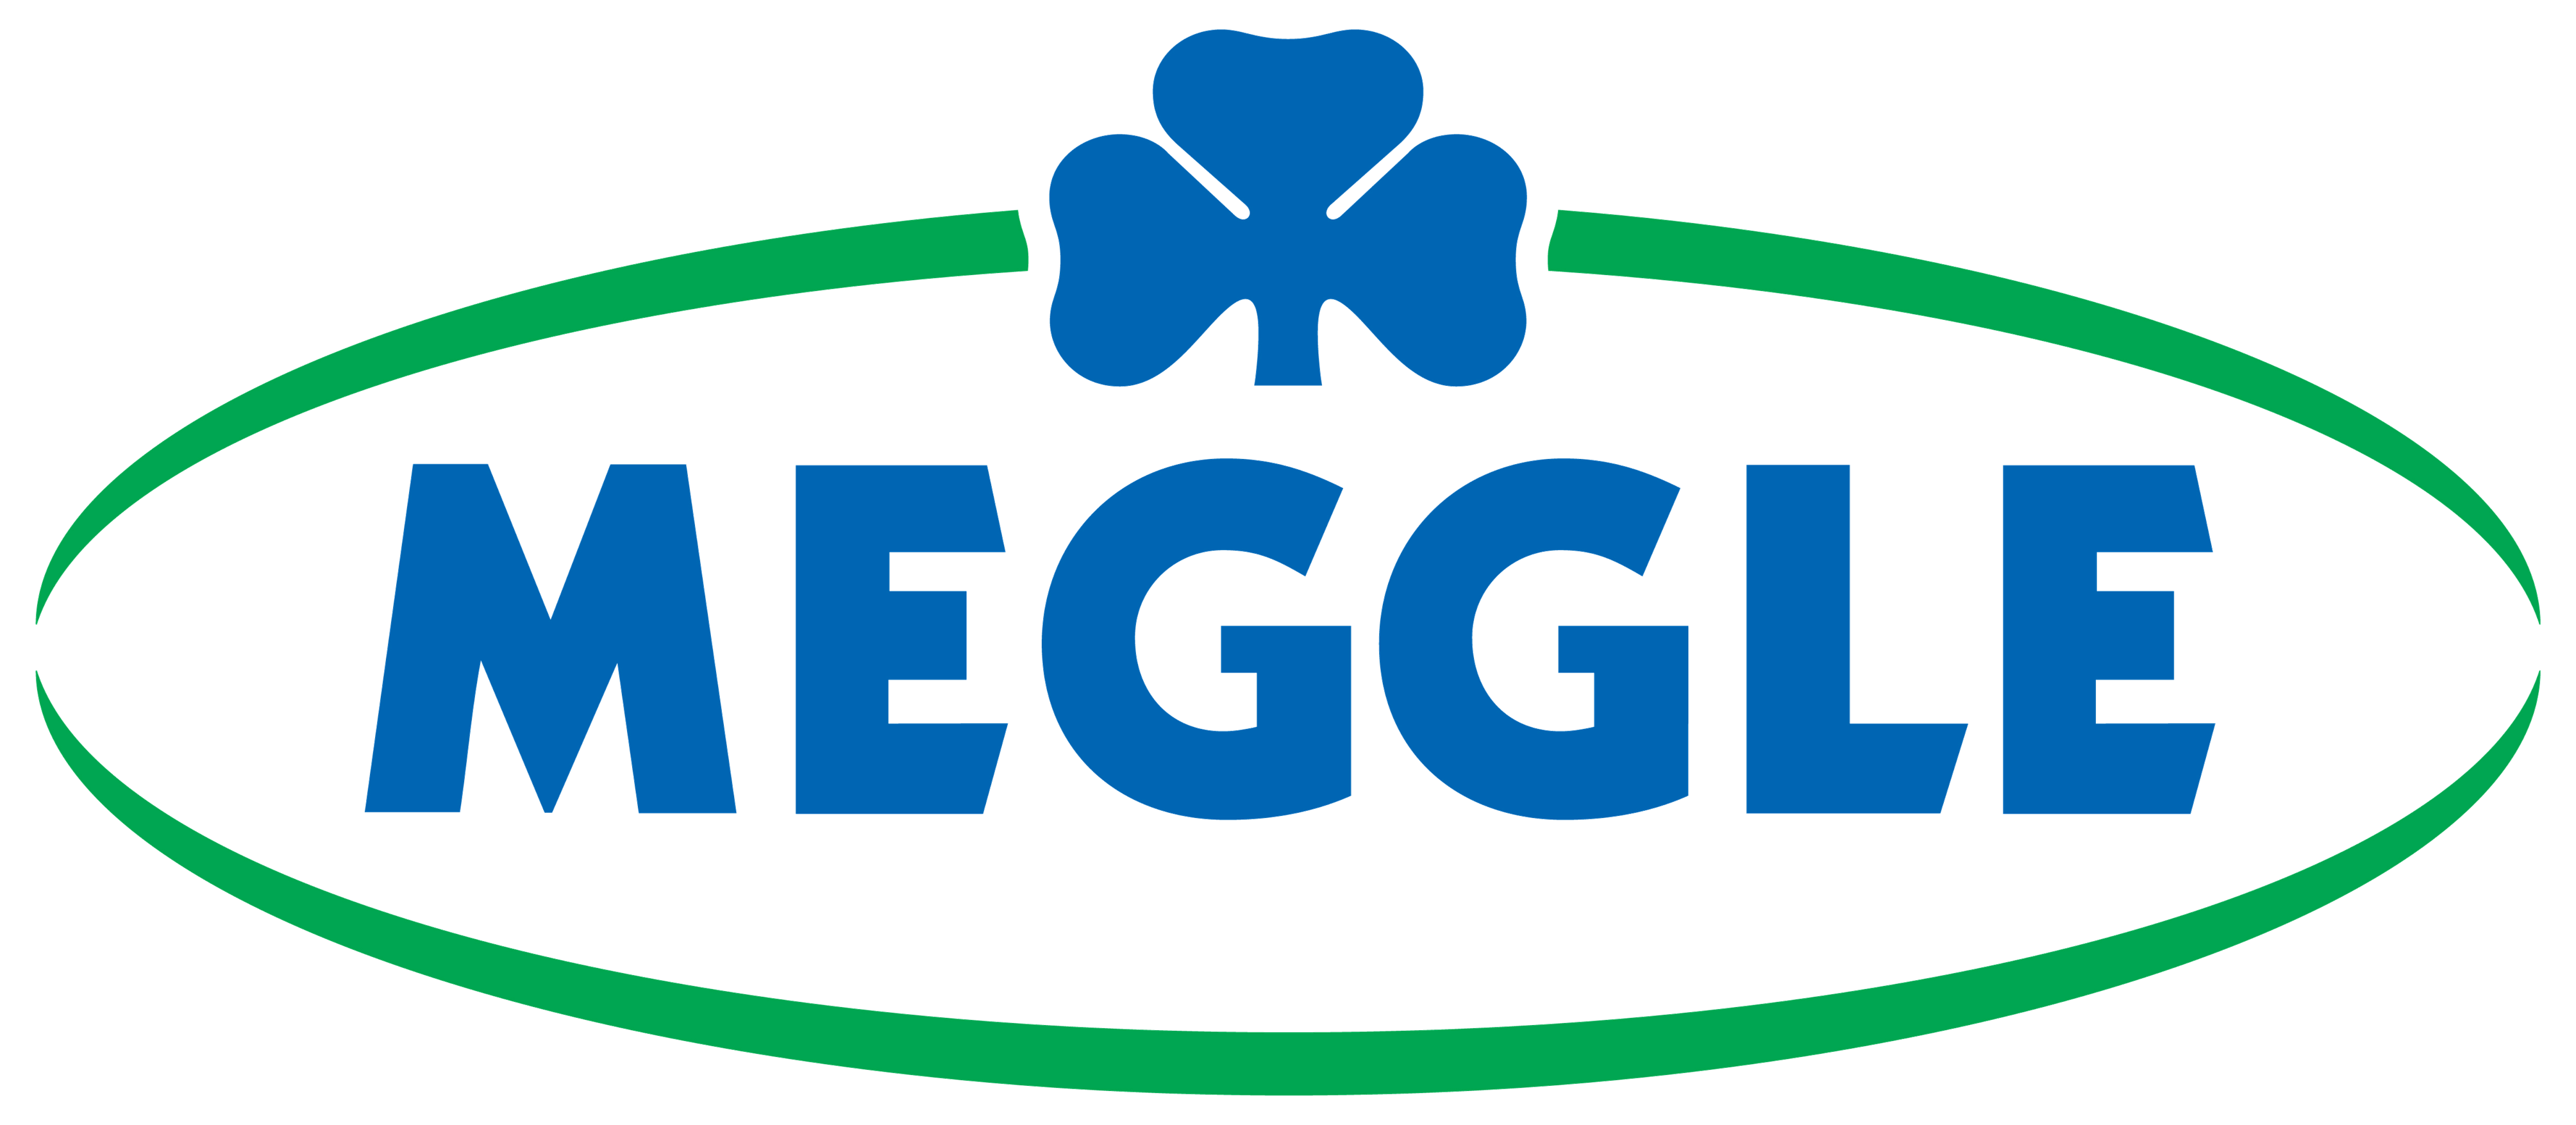 MEGGLE GmbH & Co. KG